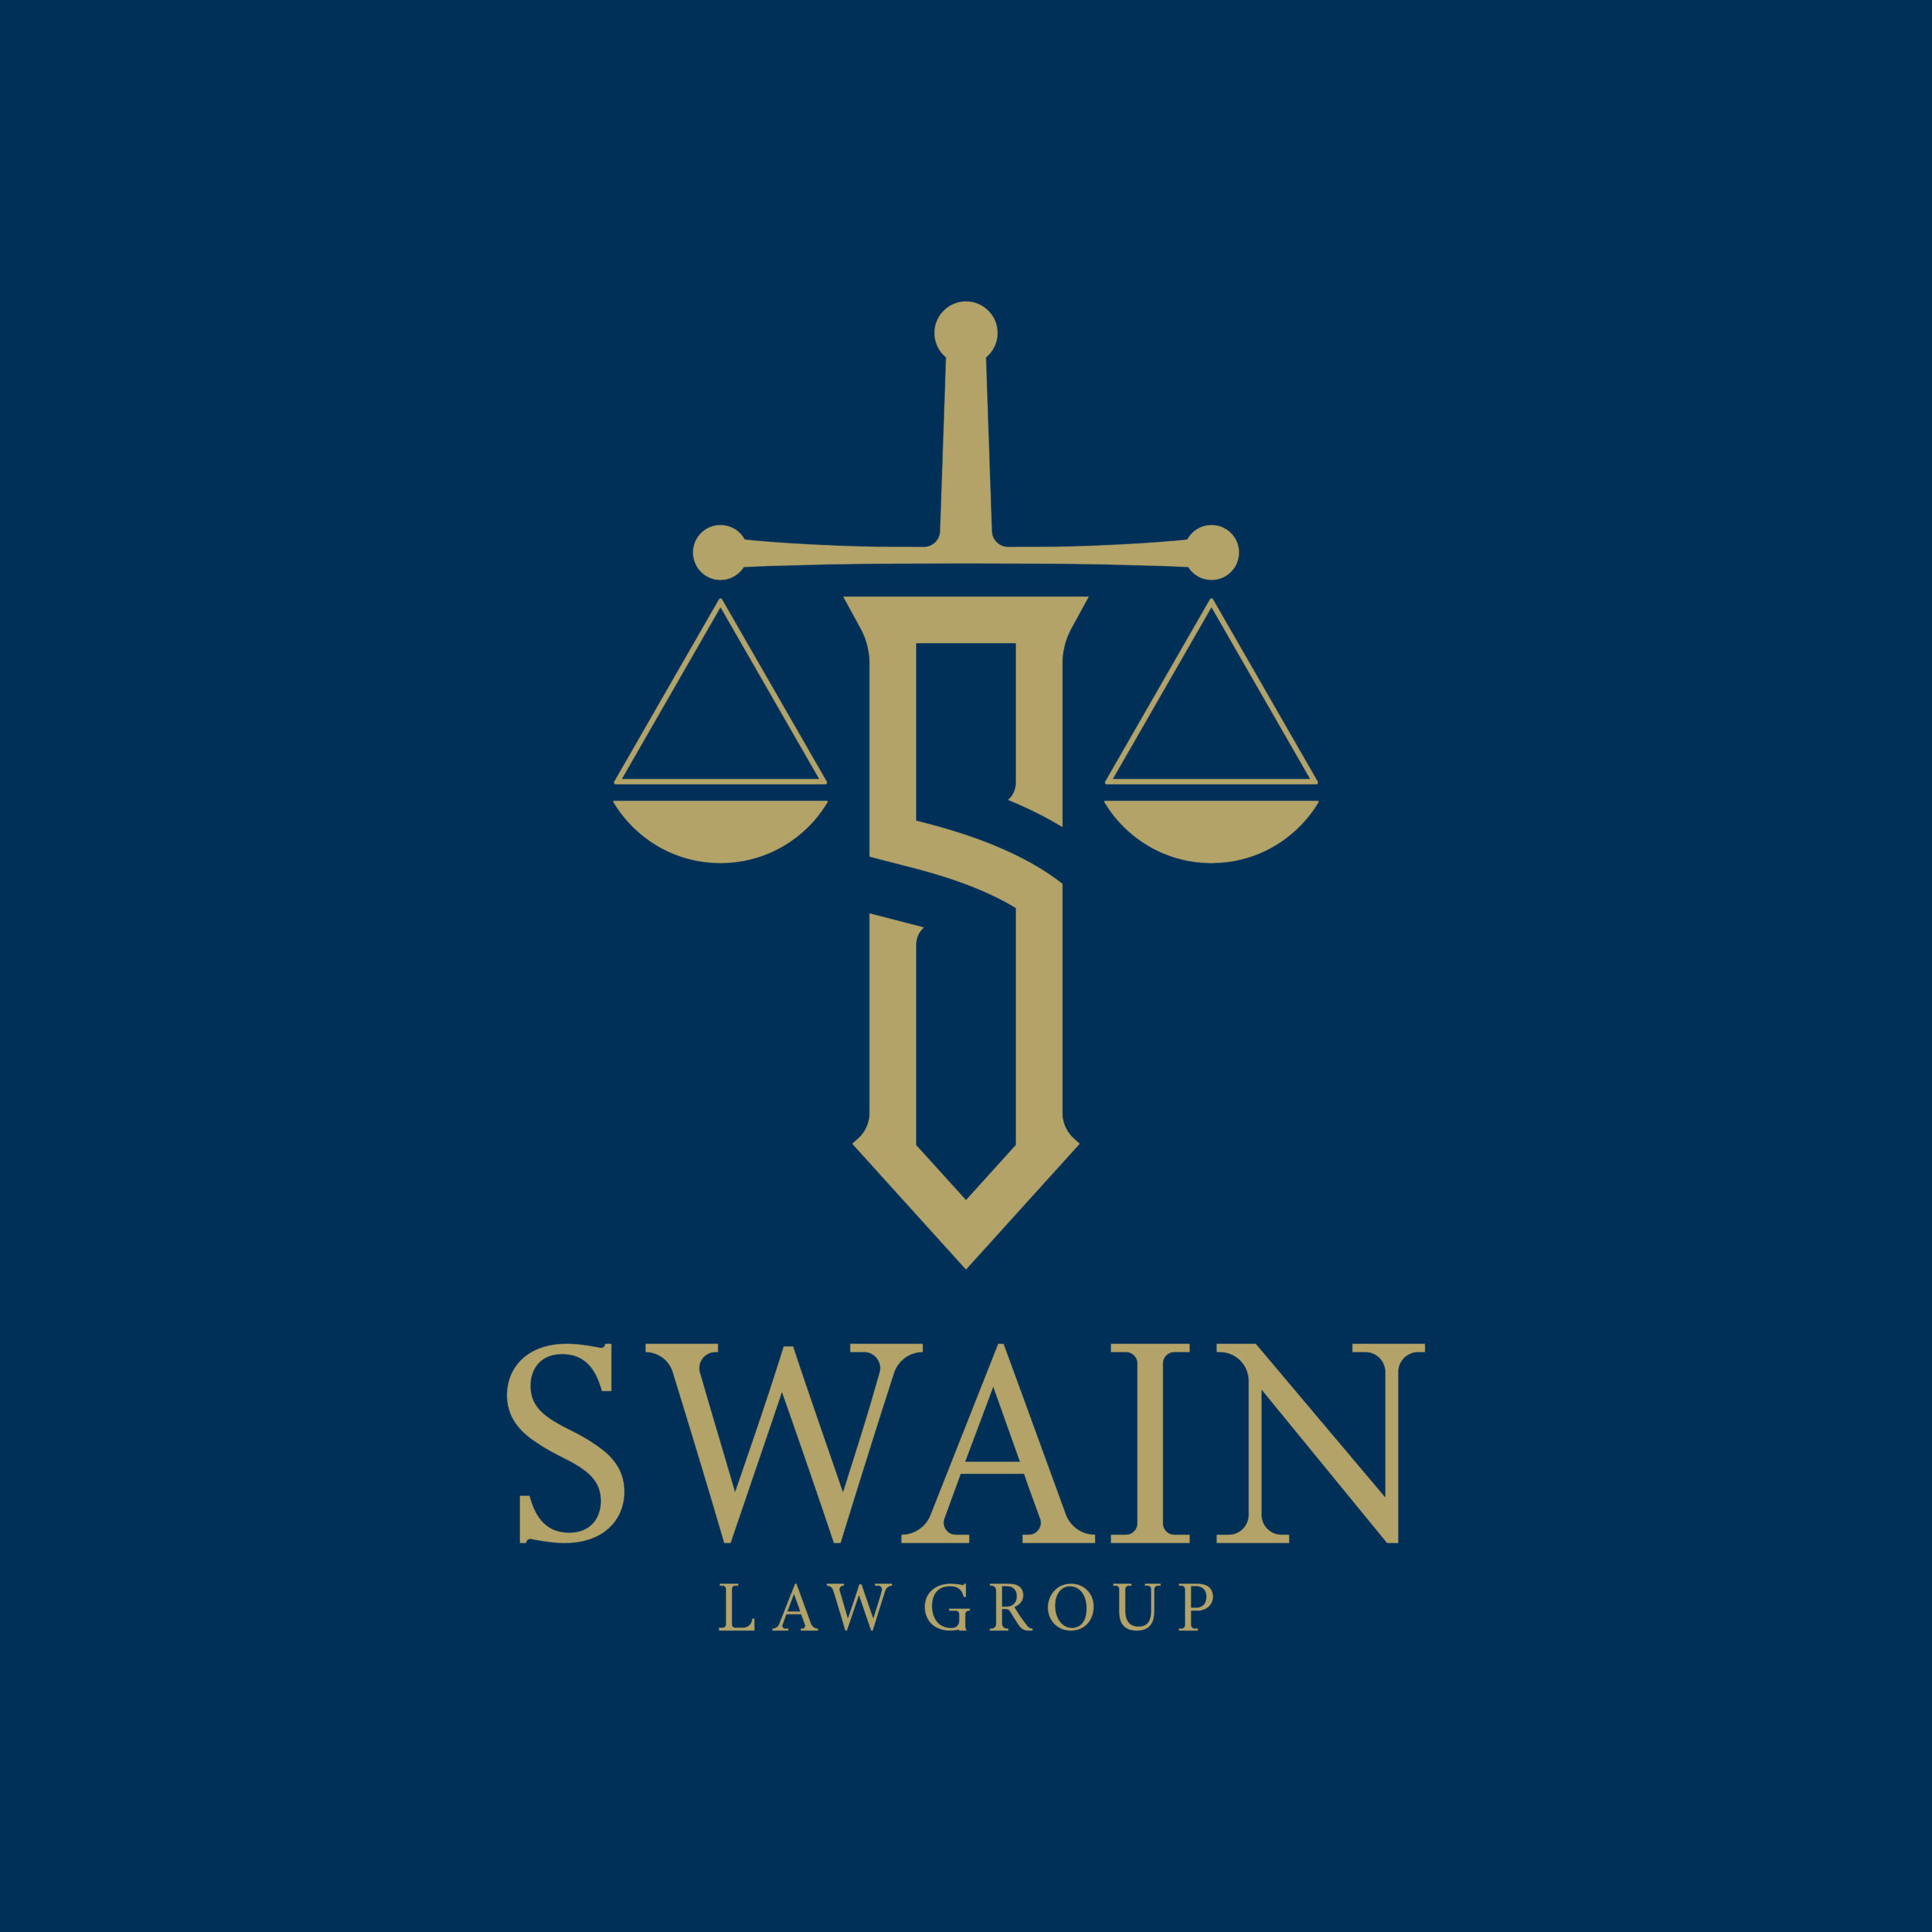 Swain Law Group